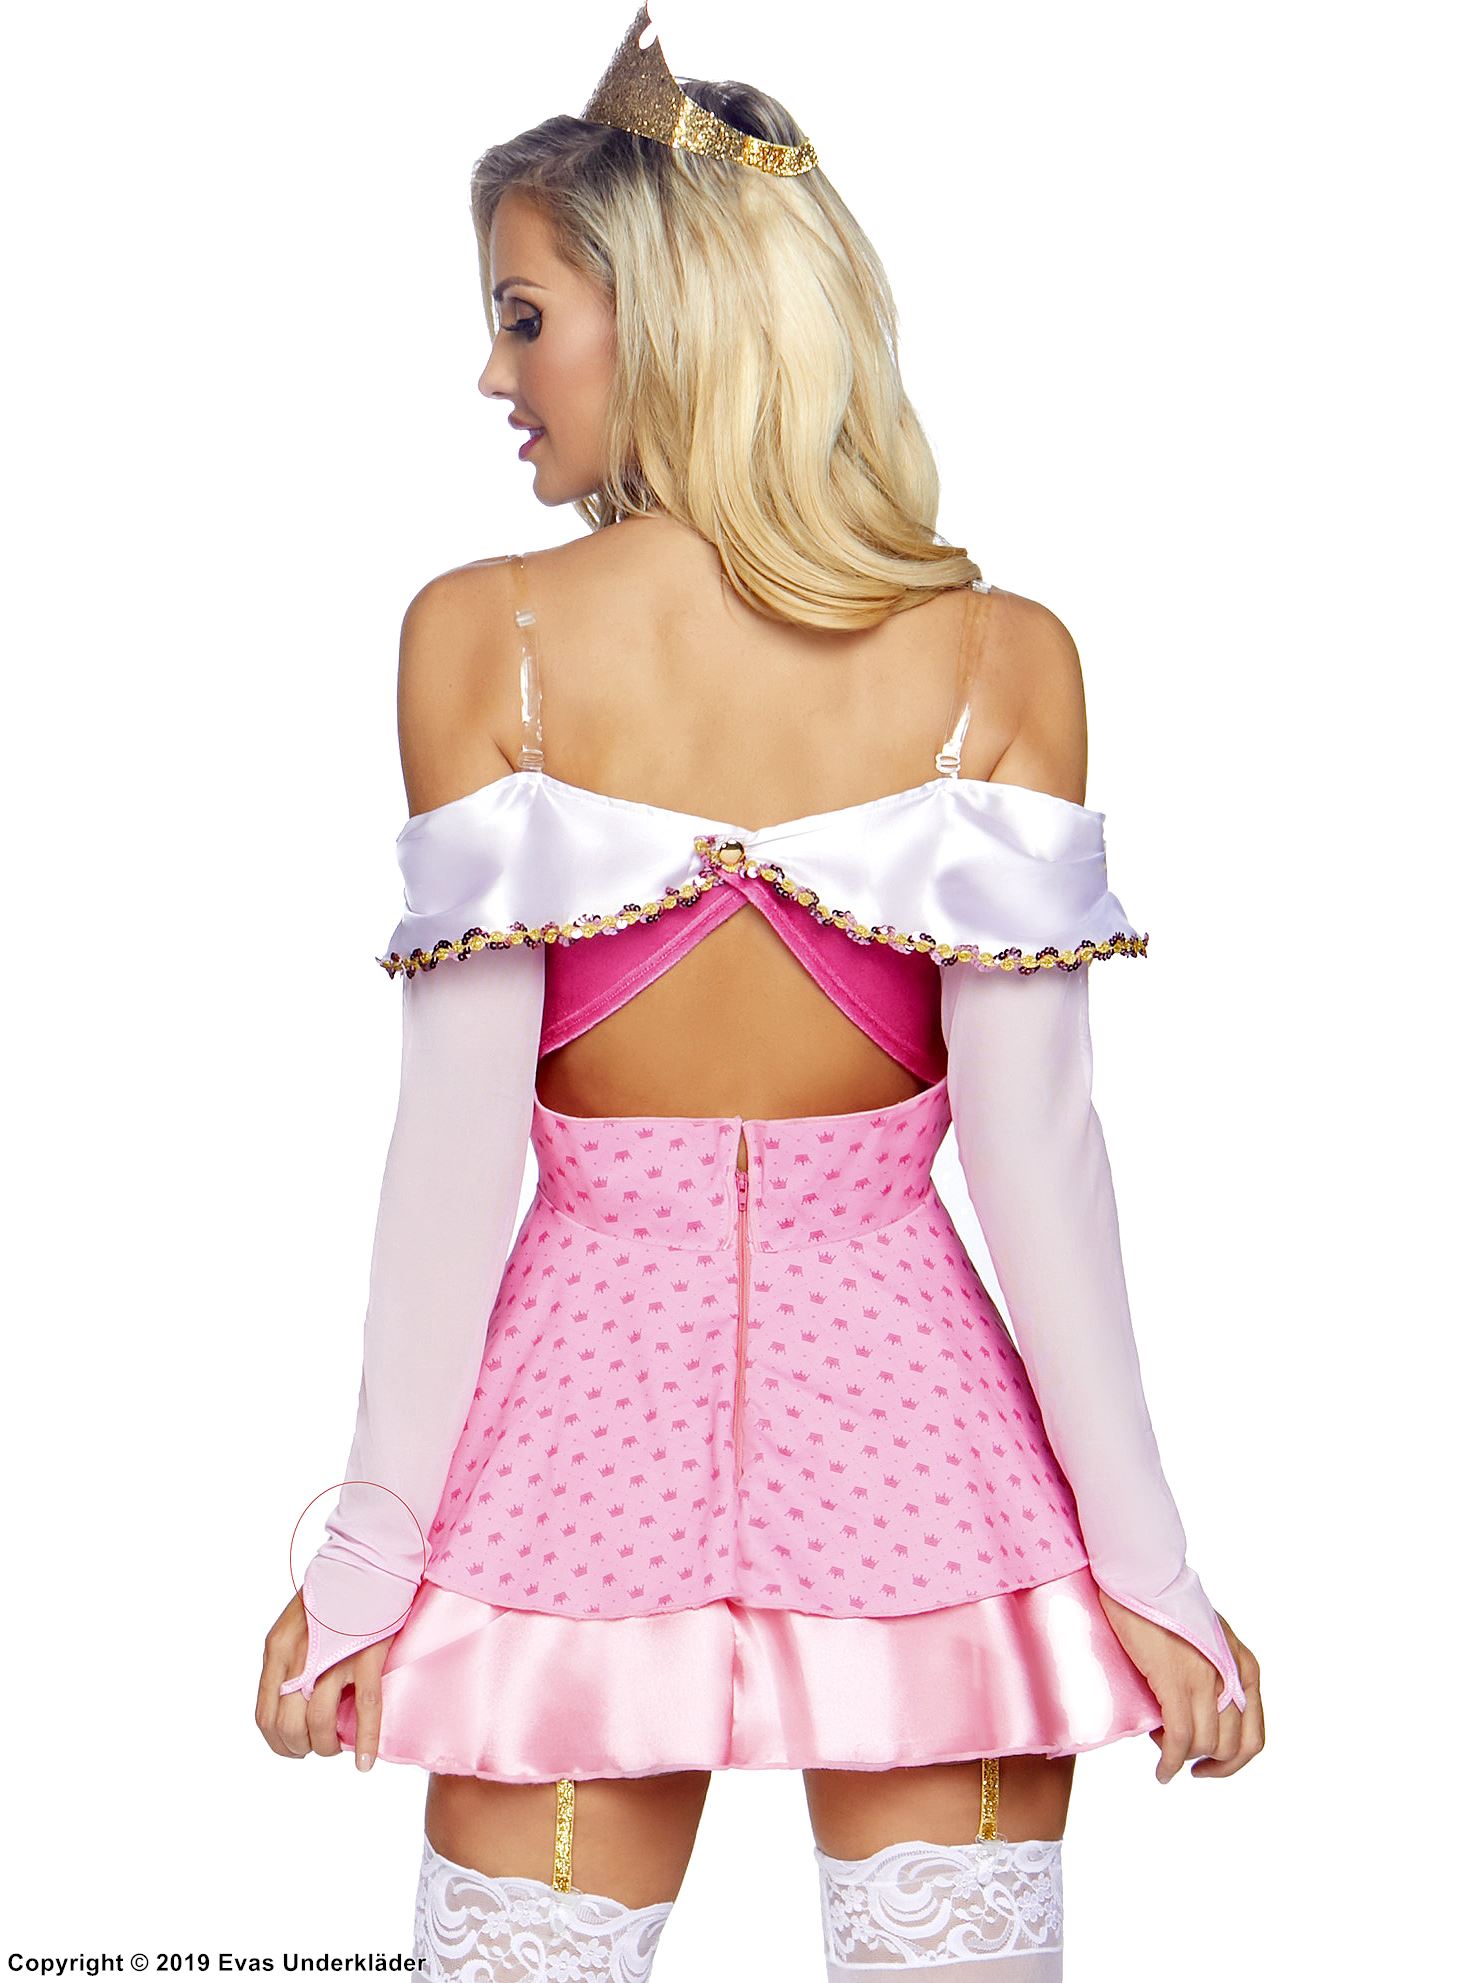 Princess Aurora from Sleeping Beauty, costume dress, rhinestones, sequins, off shoulder, gauntlet sleeves